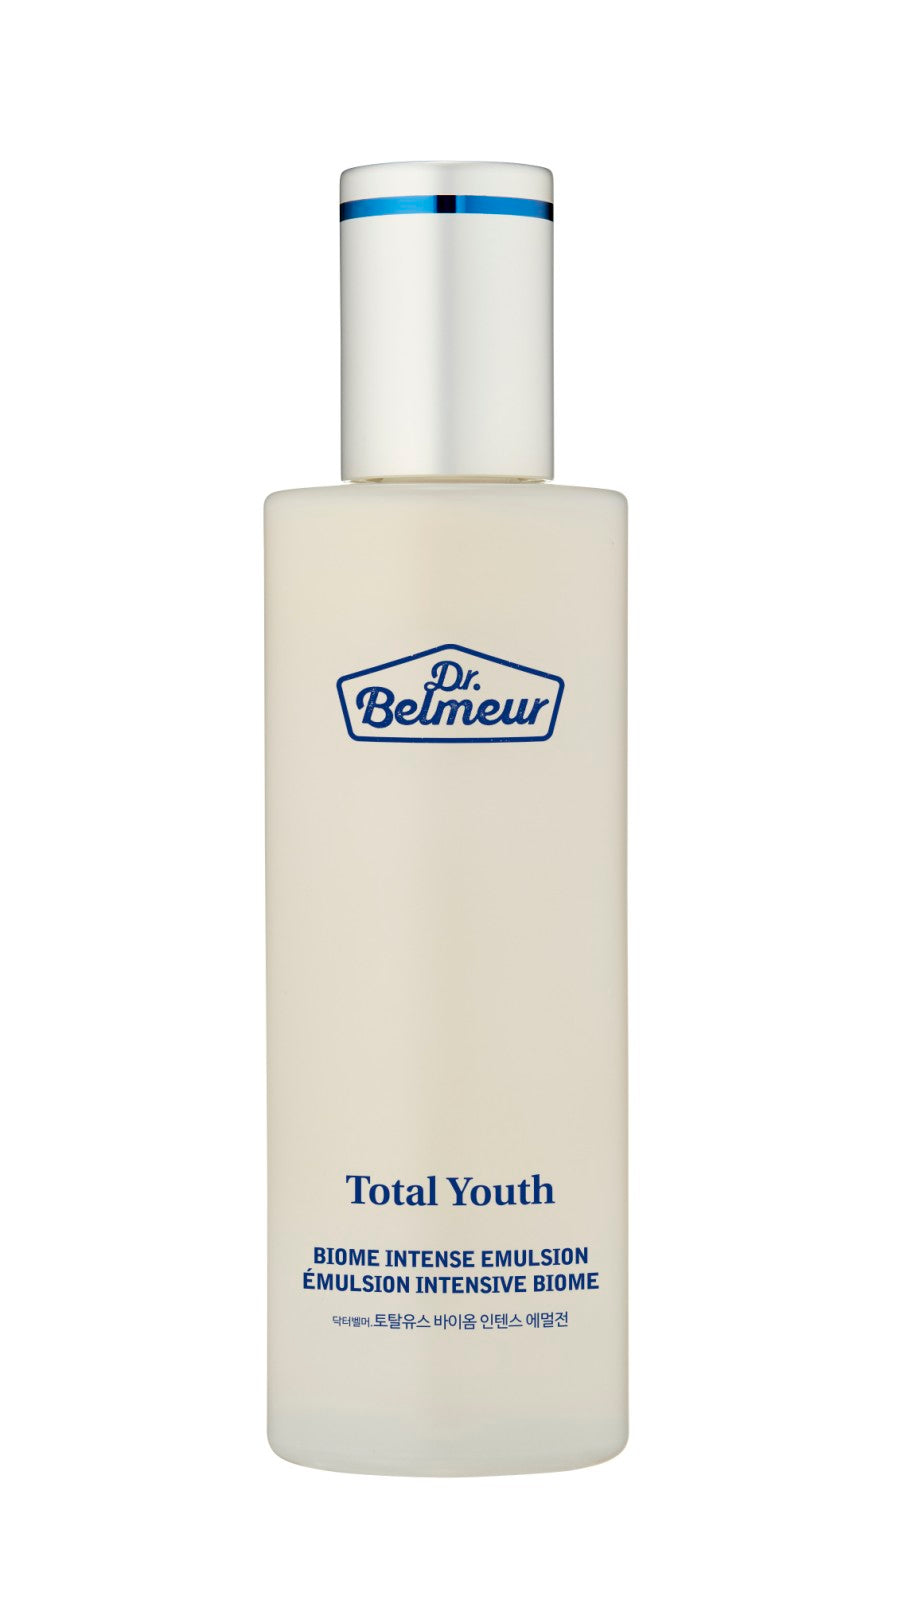 Dr. Belmeur Total Youth Biome Intense Emulsion – THE FACE SHOP